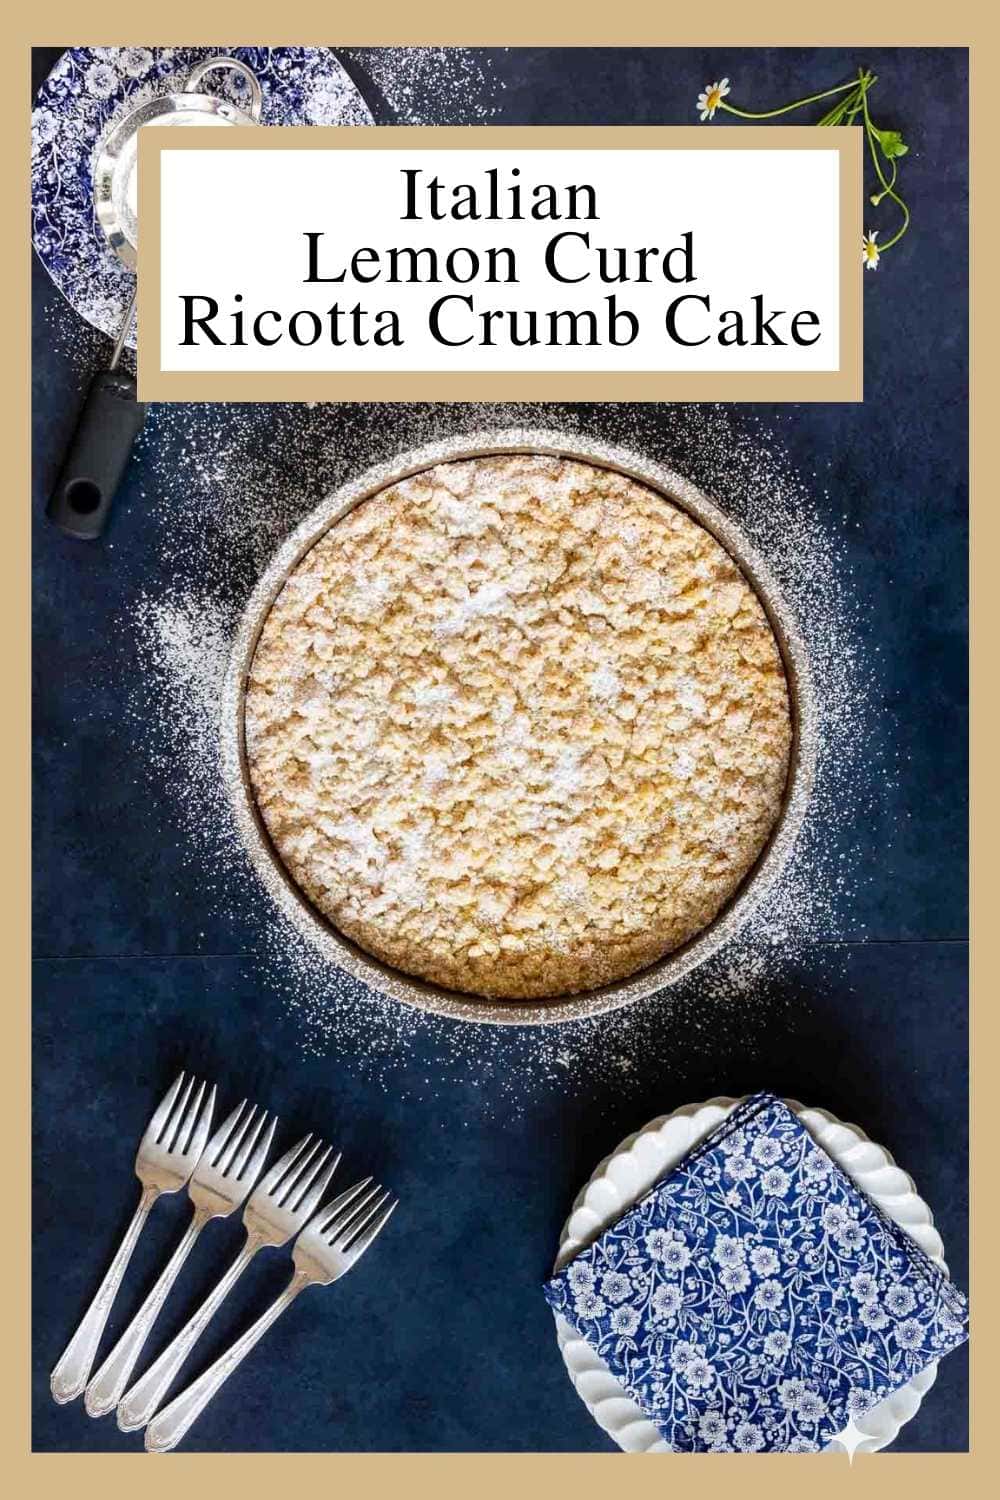 Italian Lemon Curd Ricotta Crumb Cake (Torta Sbrisolona)